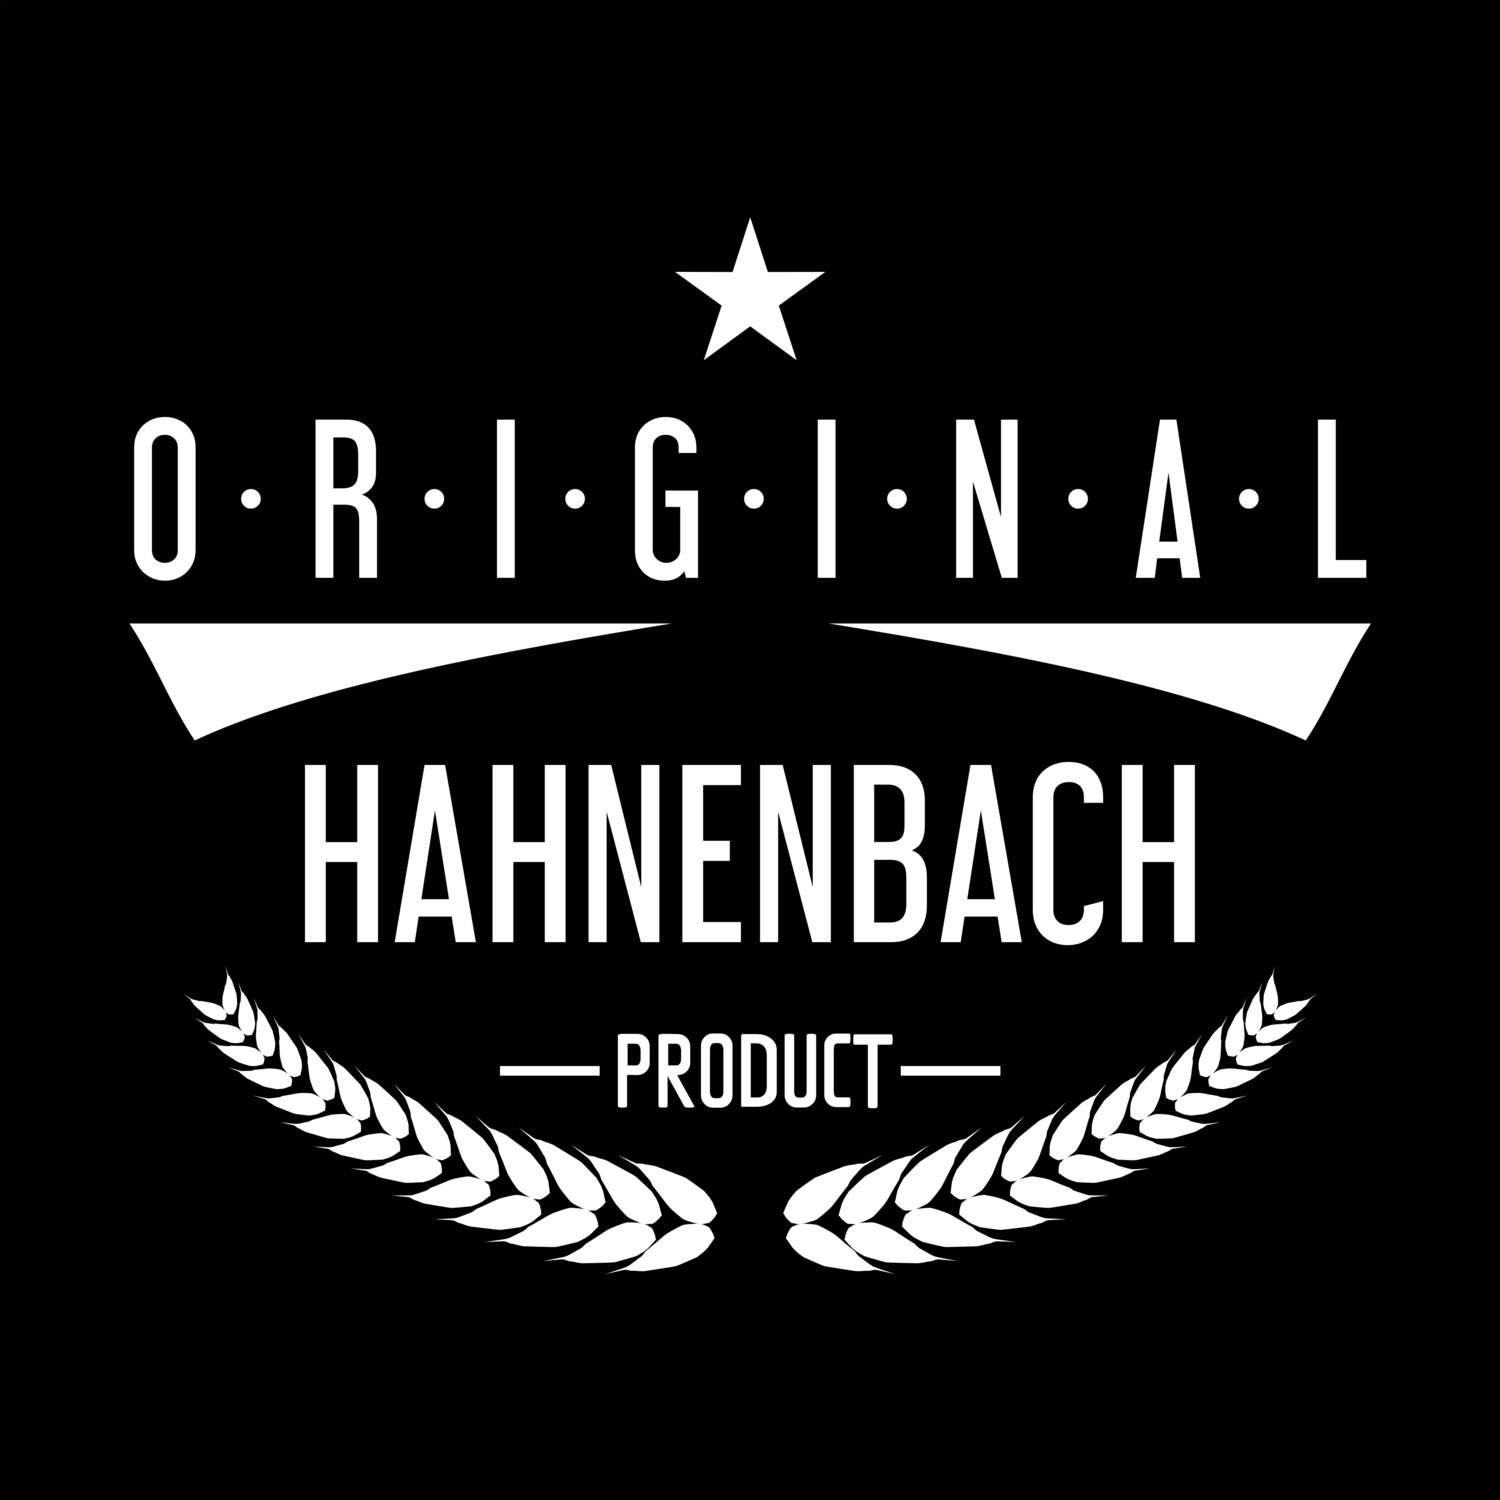 Hahnenbach T-Shirt »Original Product«